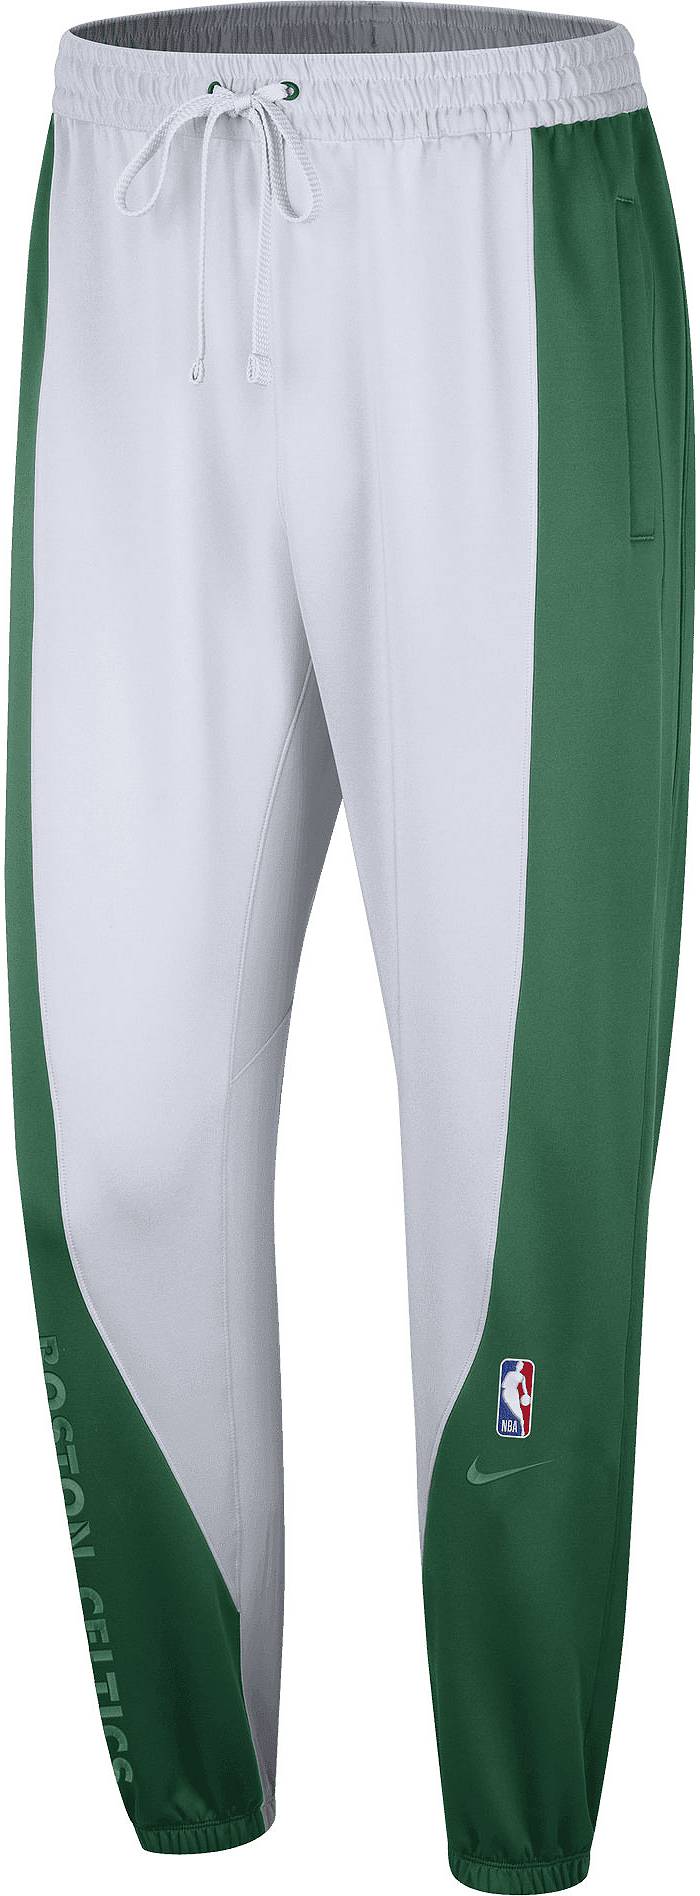 Nike Men's Boston Celtics Black Standard Issue Pants